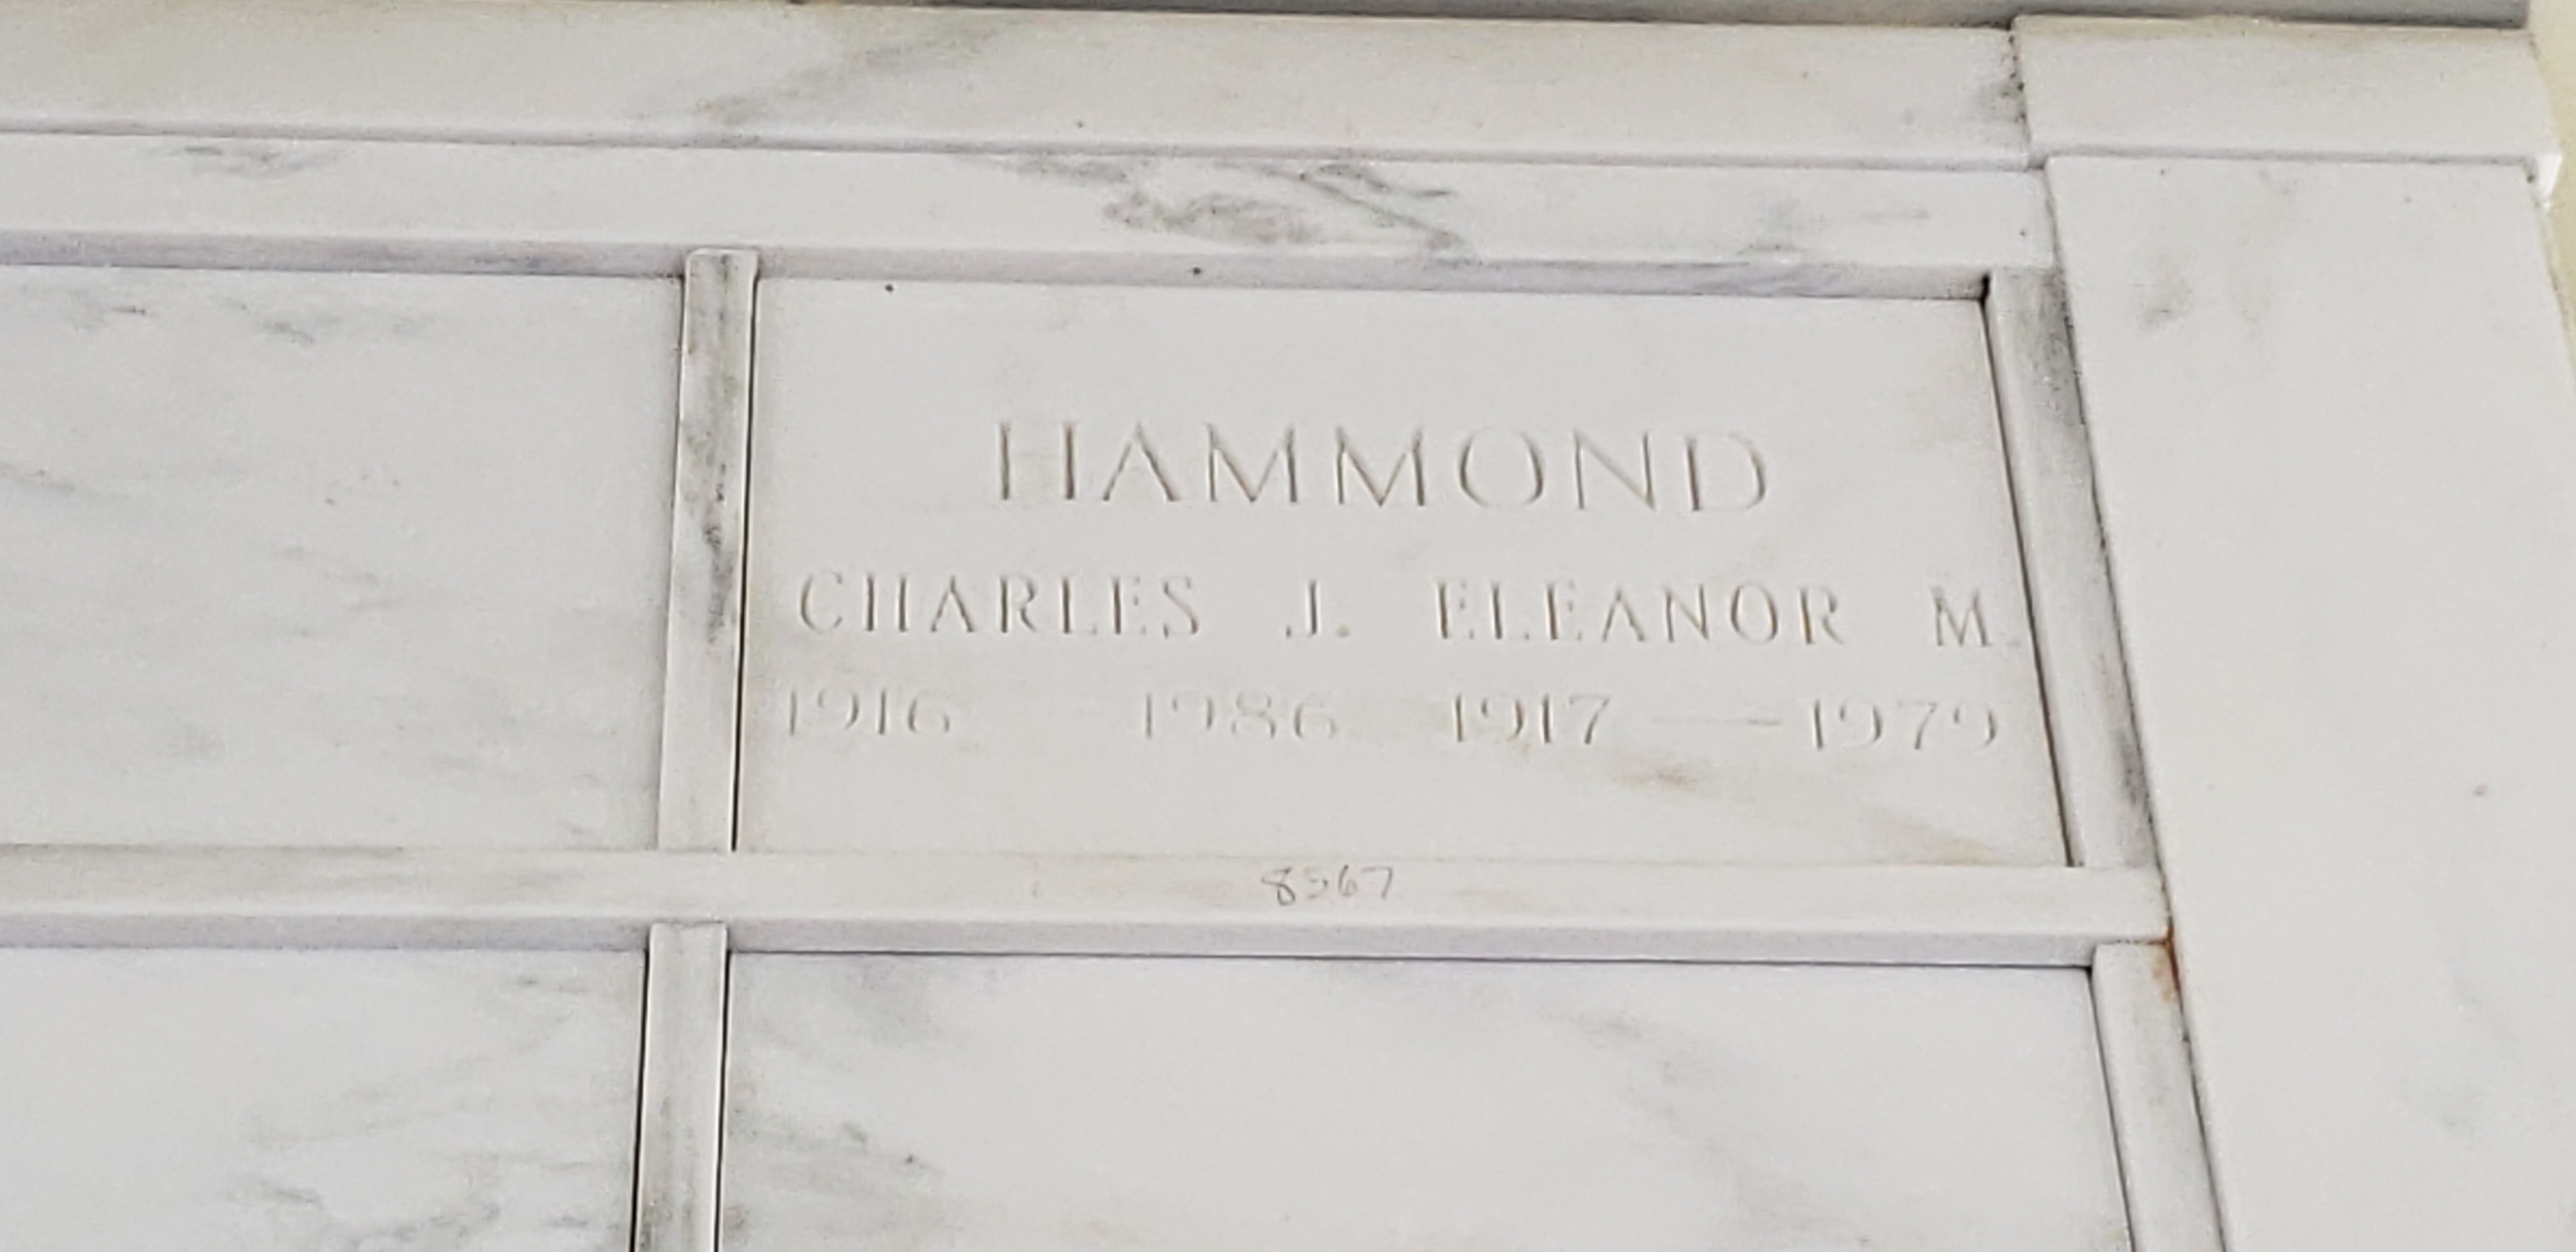 Charles J Hammond